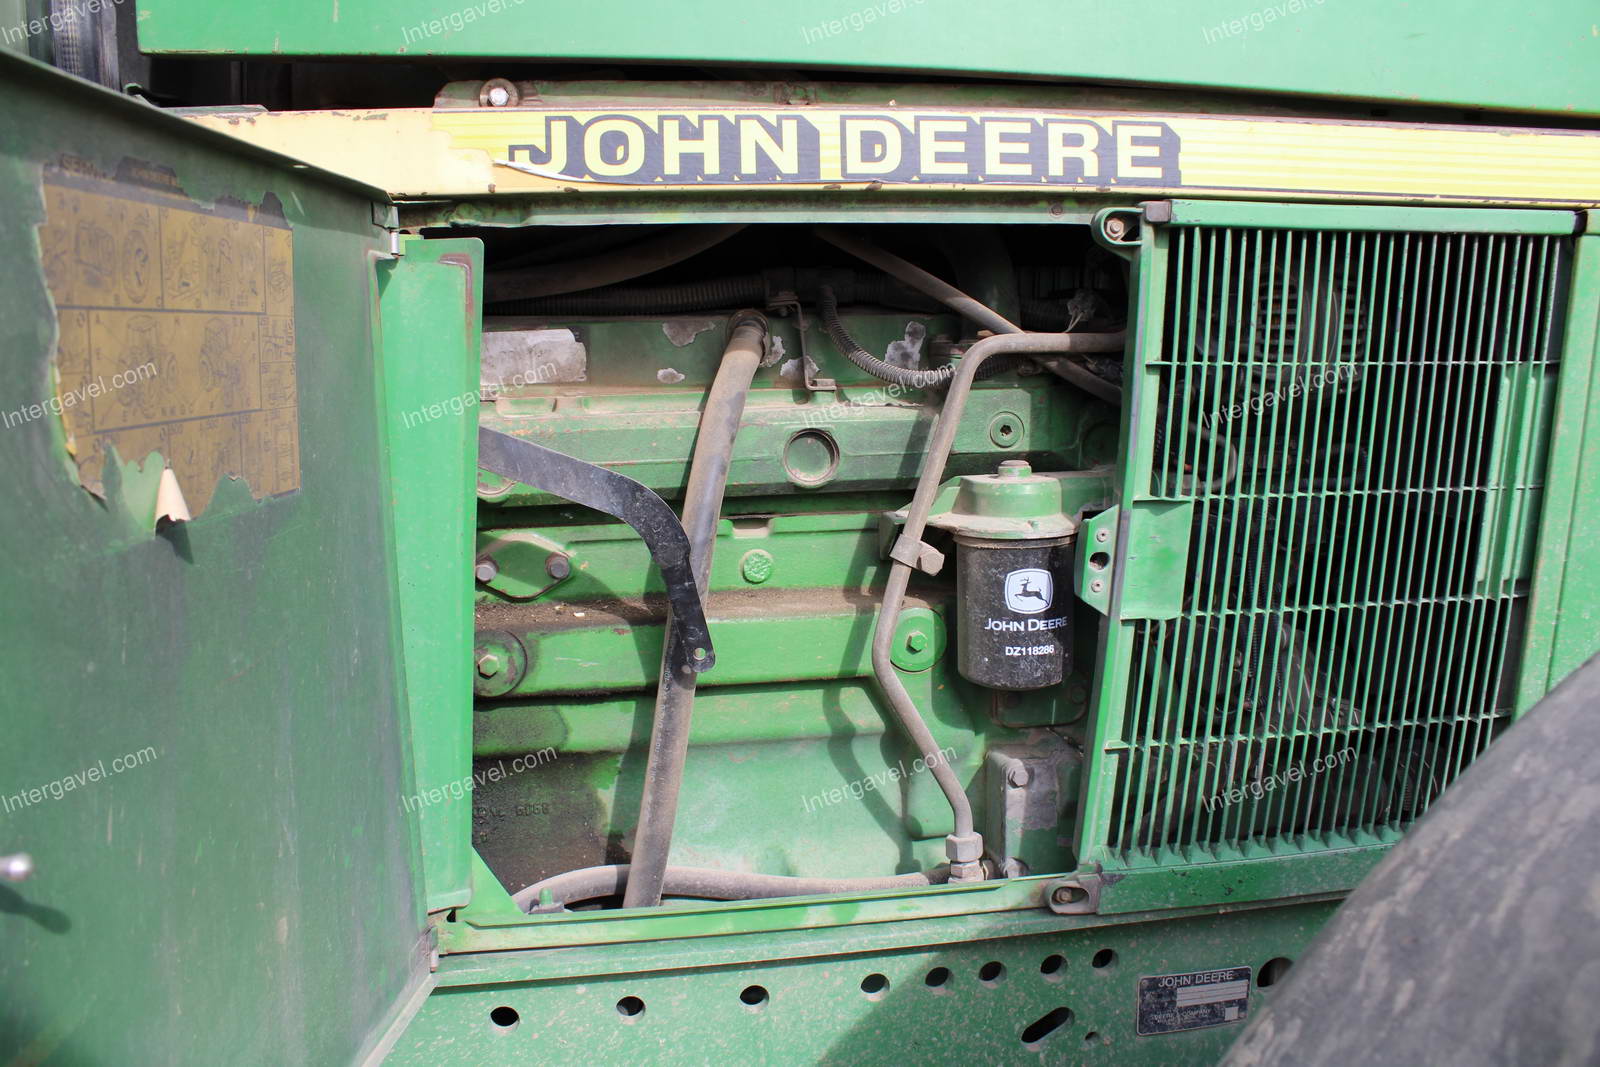 Traktor - John Deere, 6910